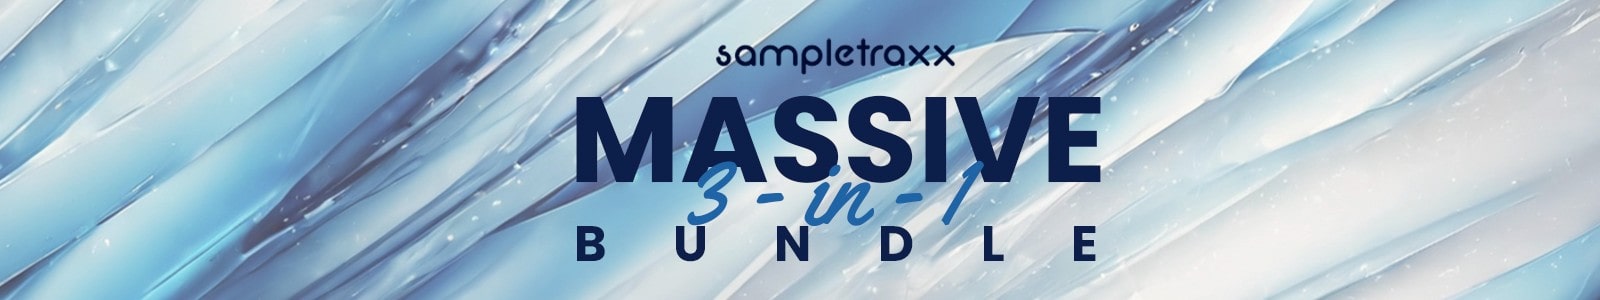 Massive 3-in-1 Winter Bundle by Sampletraxx